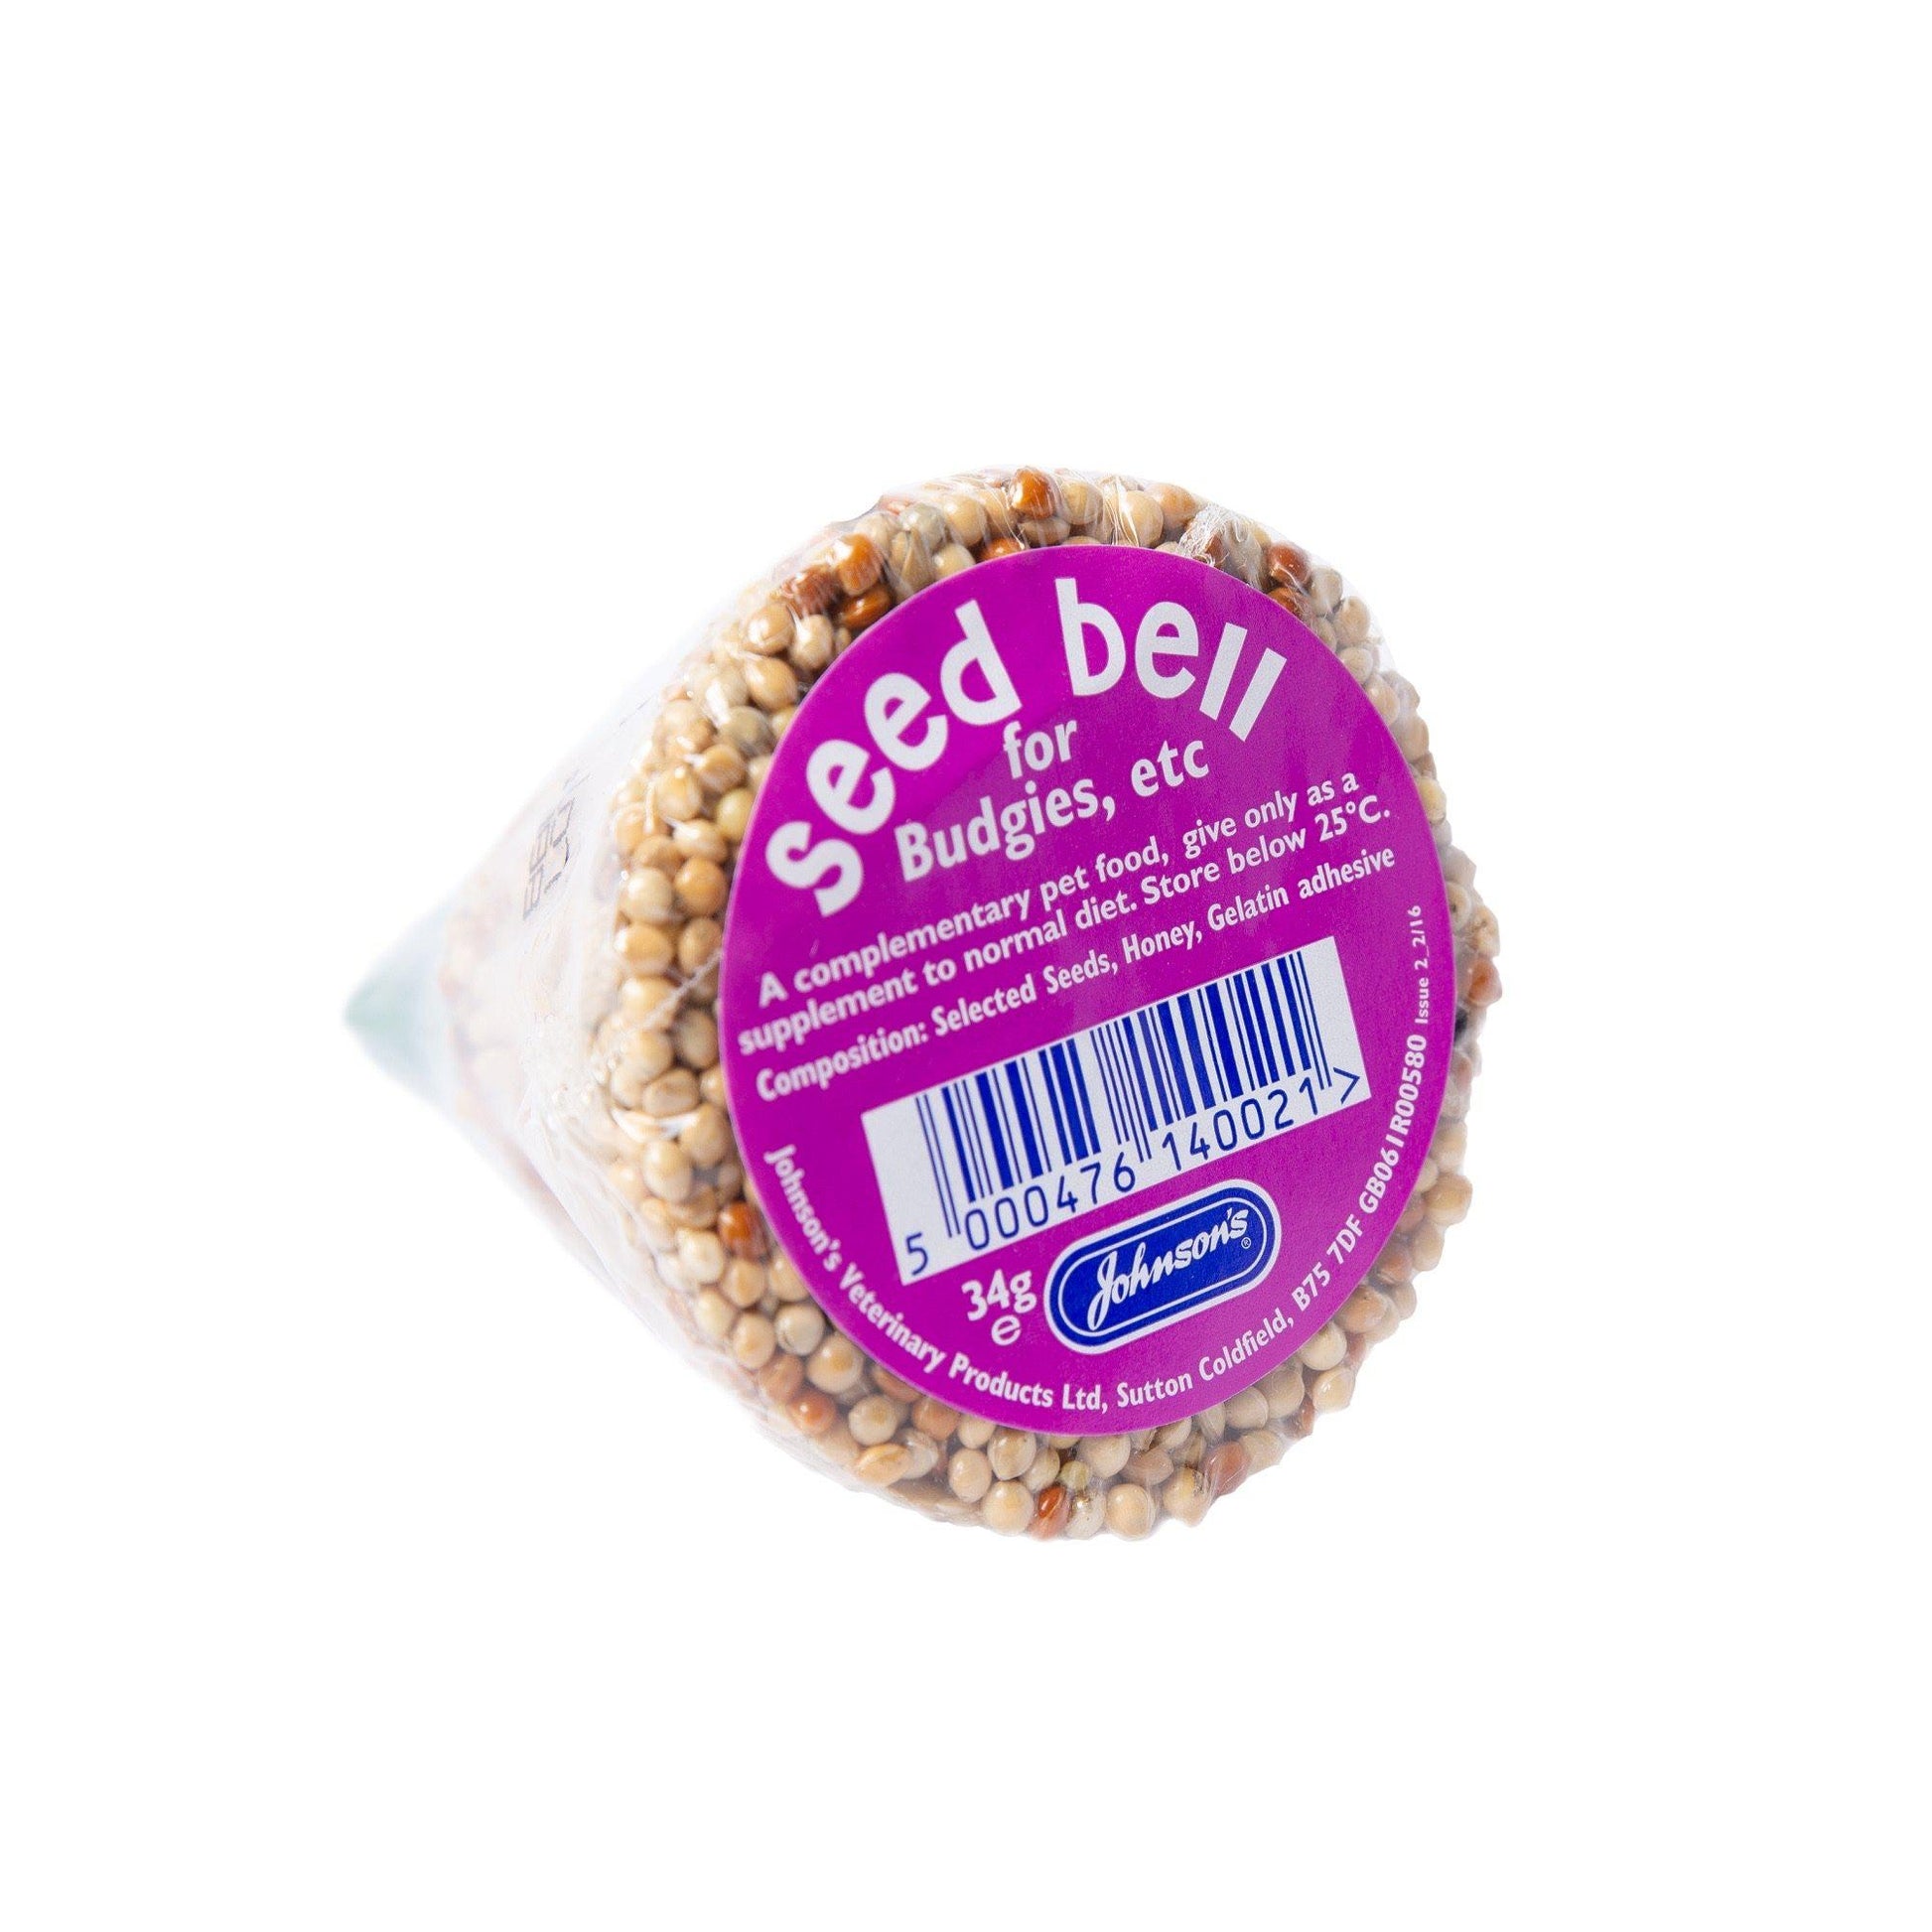 Johnson’s Seed Bell-Pettitt and Boo